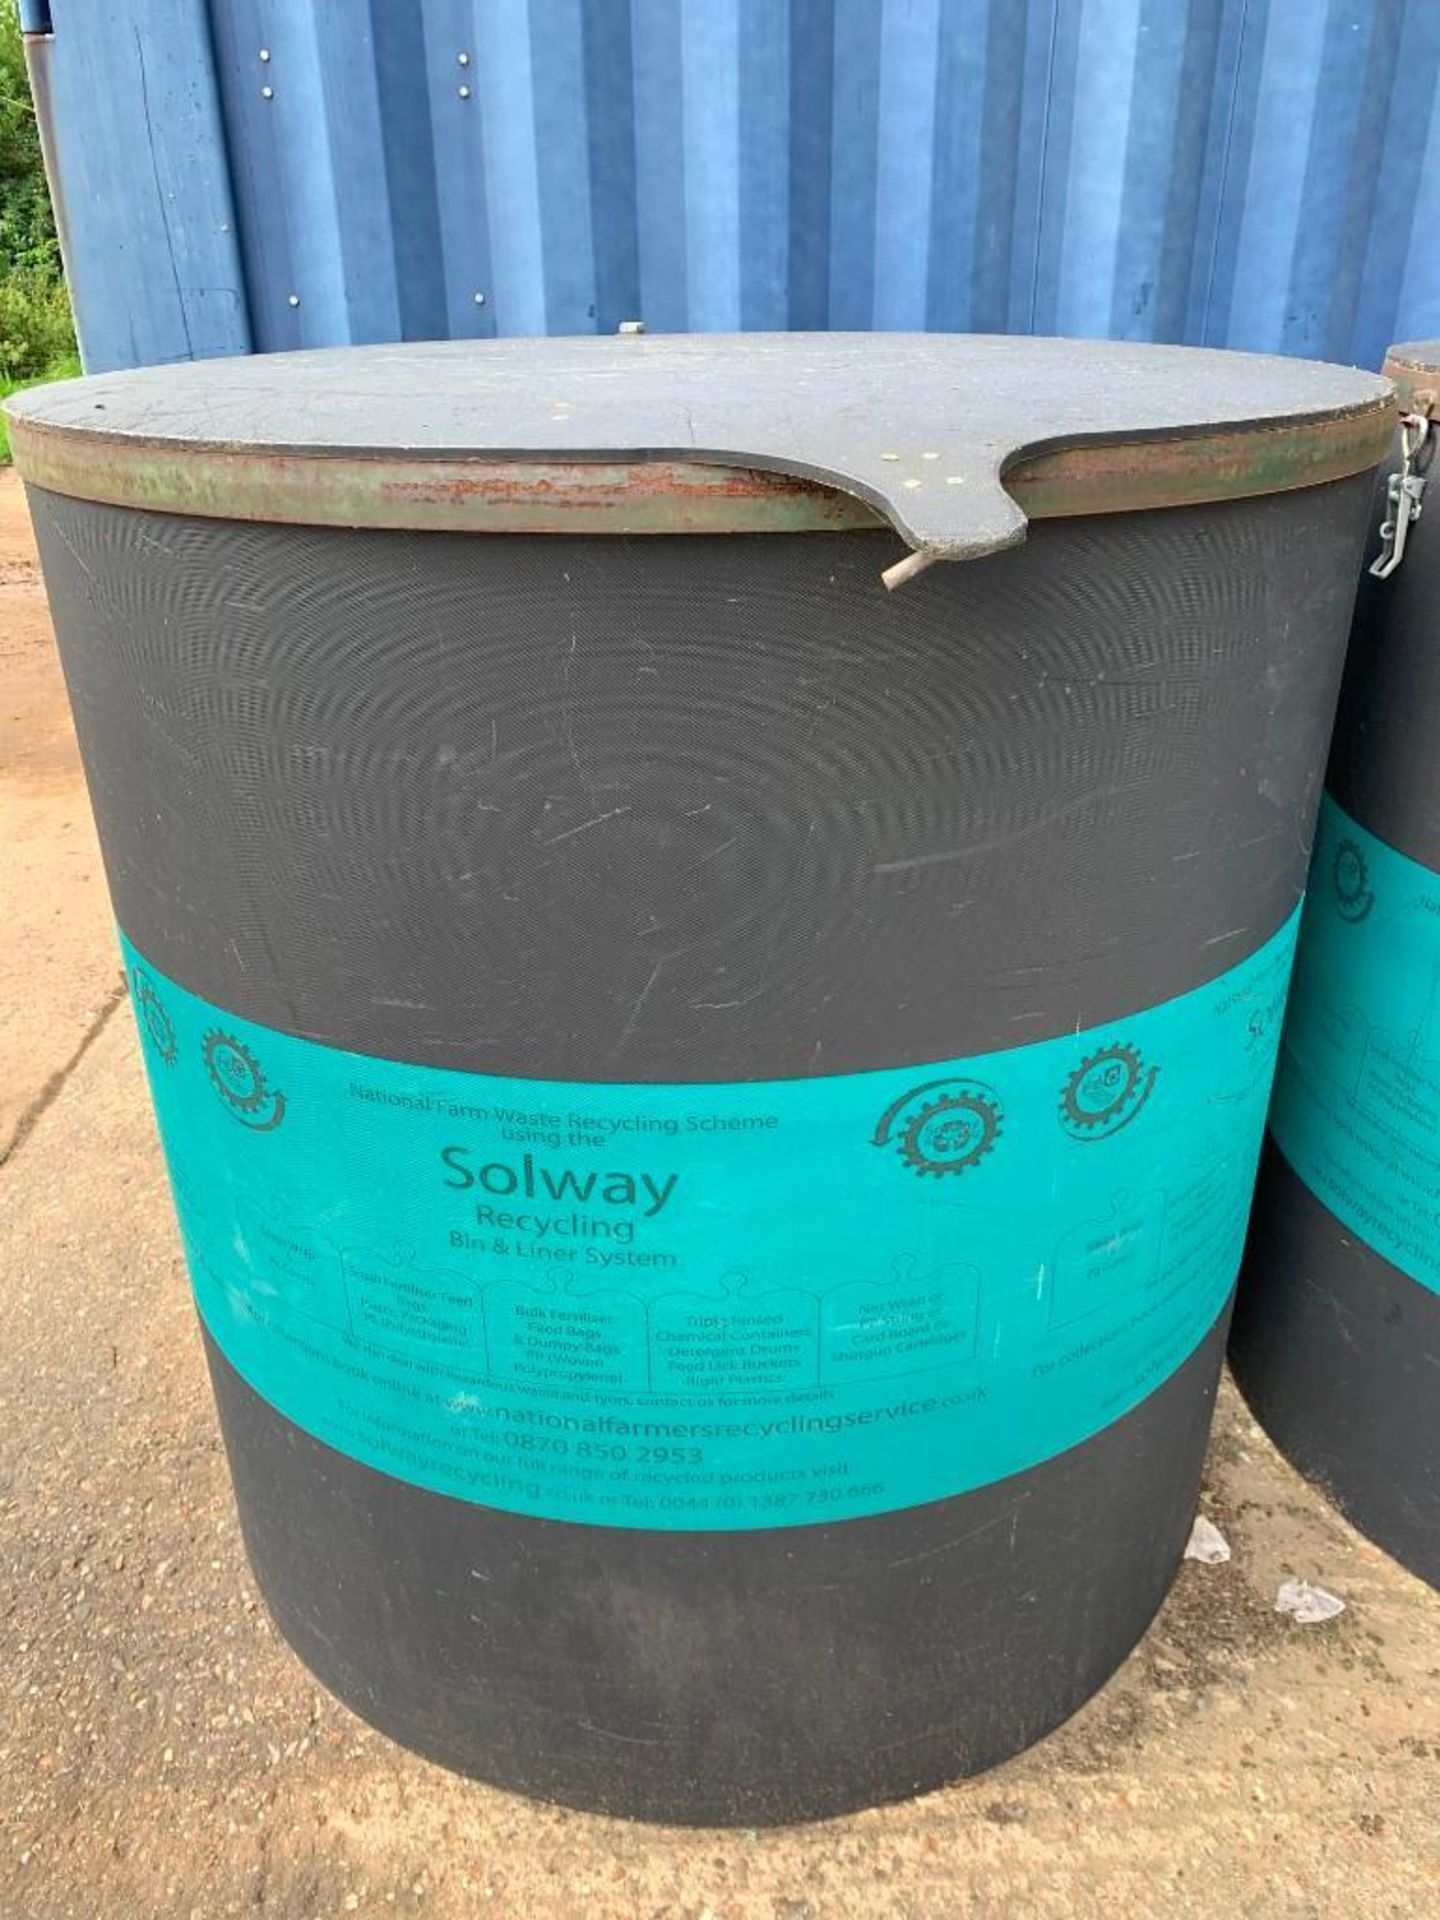 Solway Recycling Bin